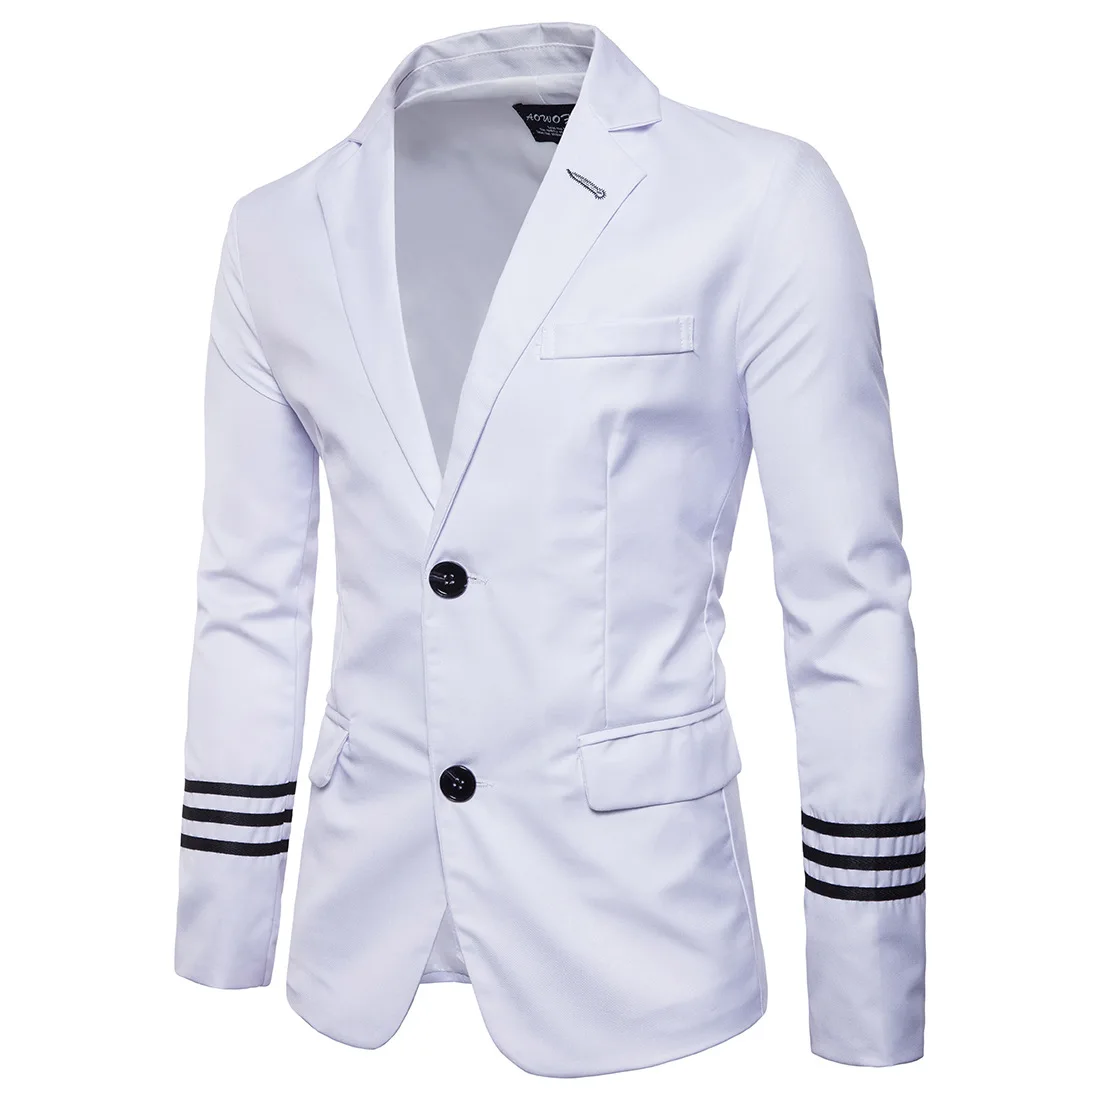 Hot Style Men's Blazer Fashion Men Clothing Male Suit Jacket Long Sleeve Stripe Casual Slim Fit Fancy Party Singer Blazzer Coat